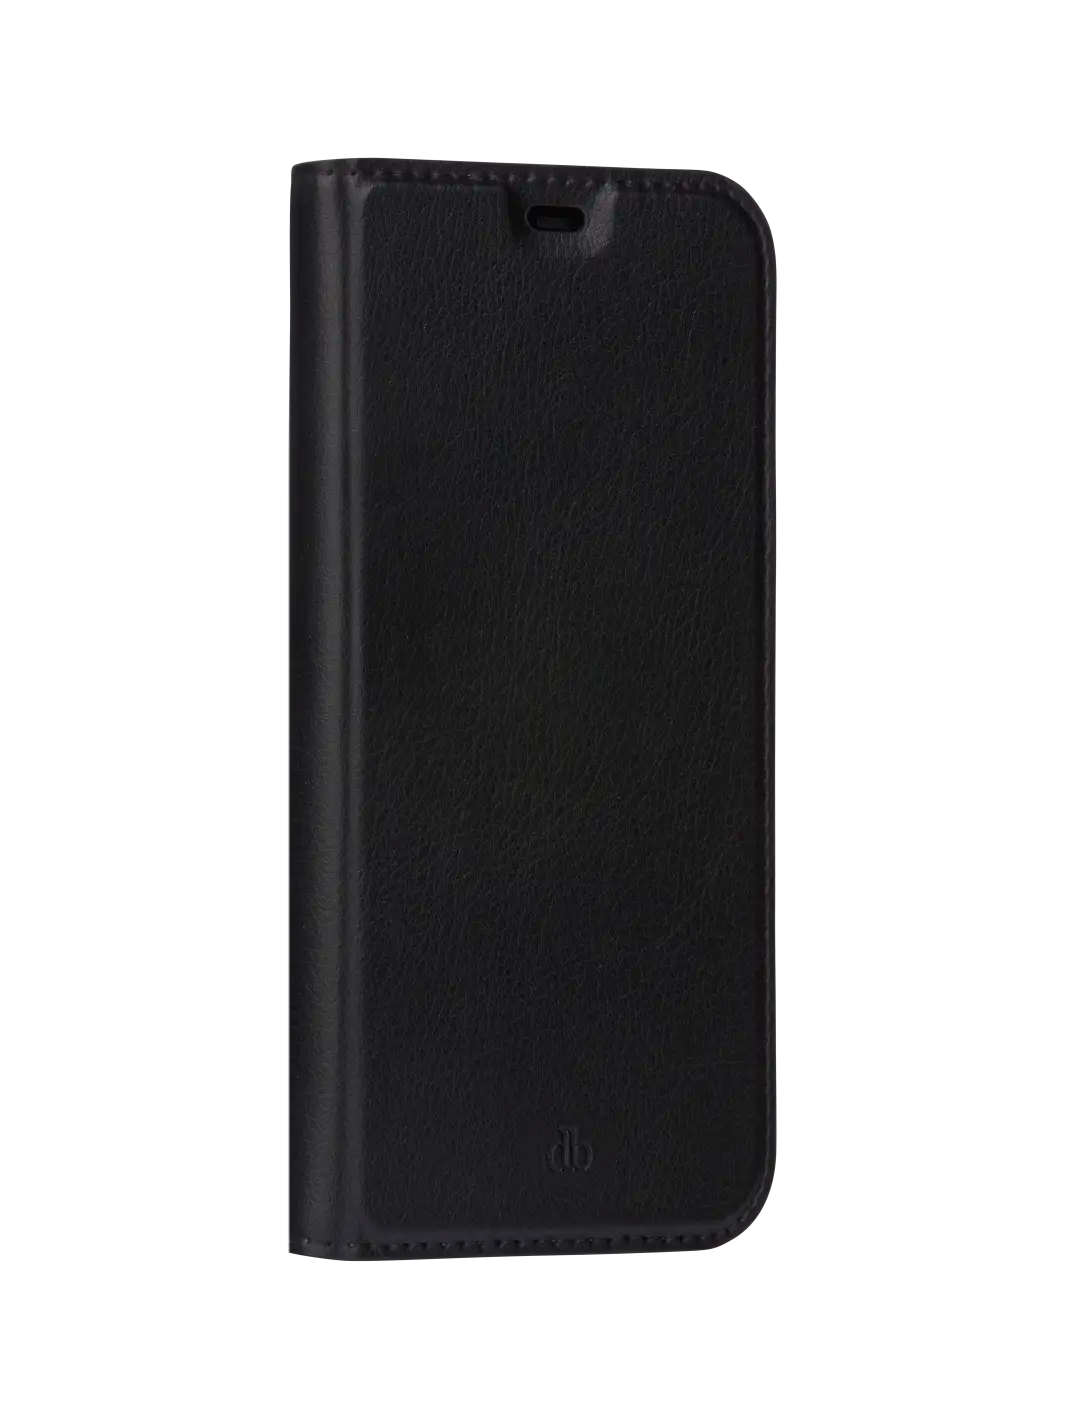 Oslo Black iPhone 12 12 Pro Phone Cases